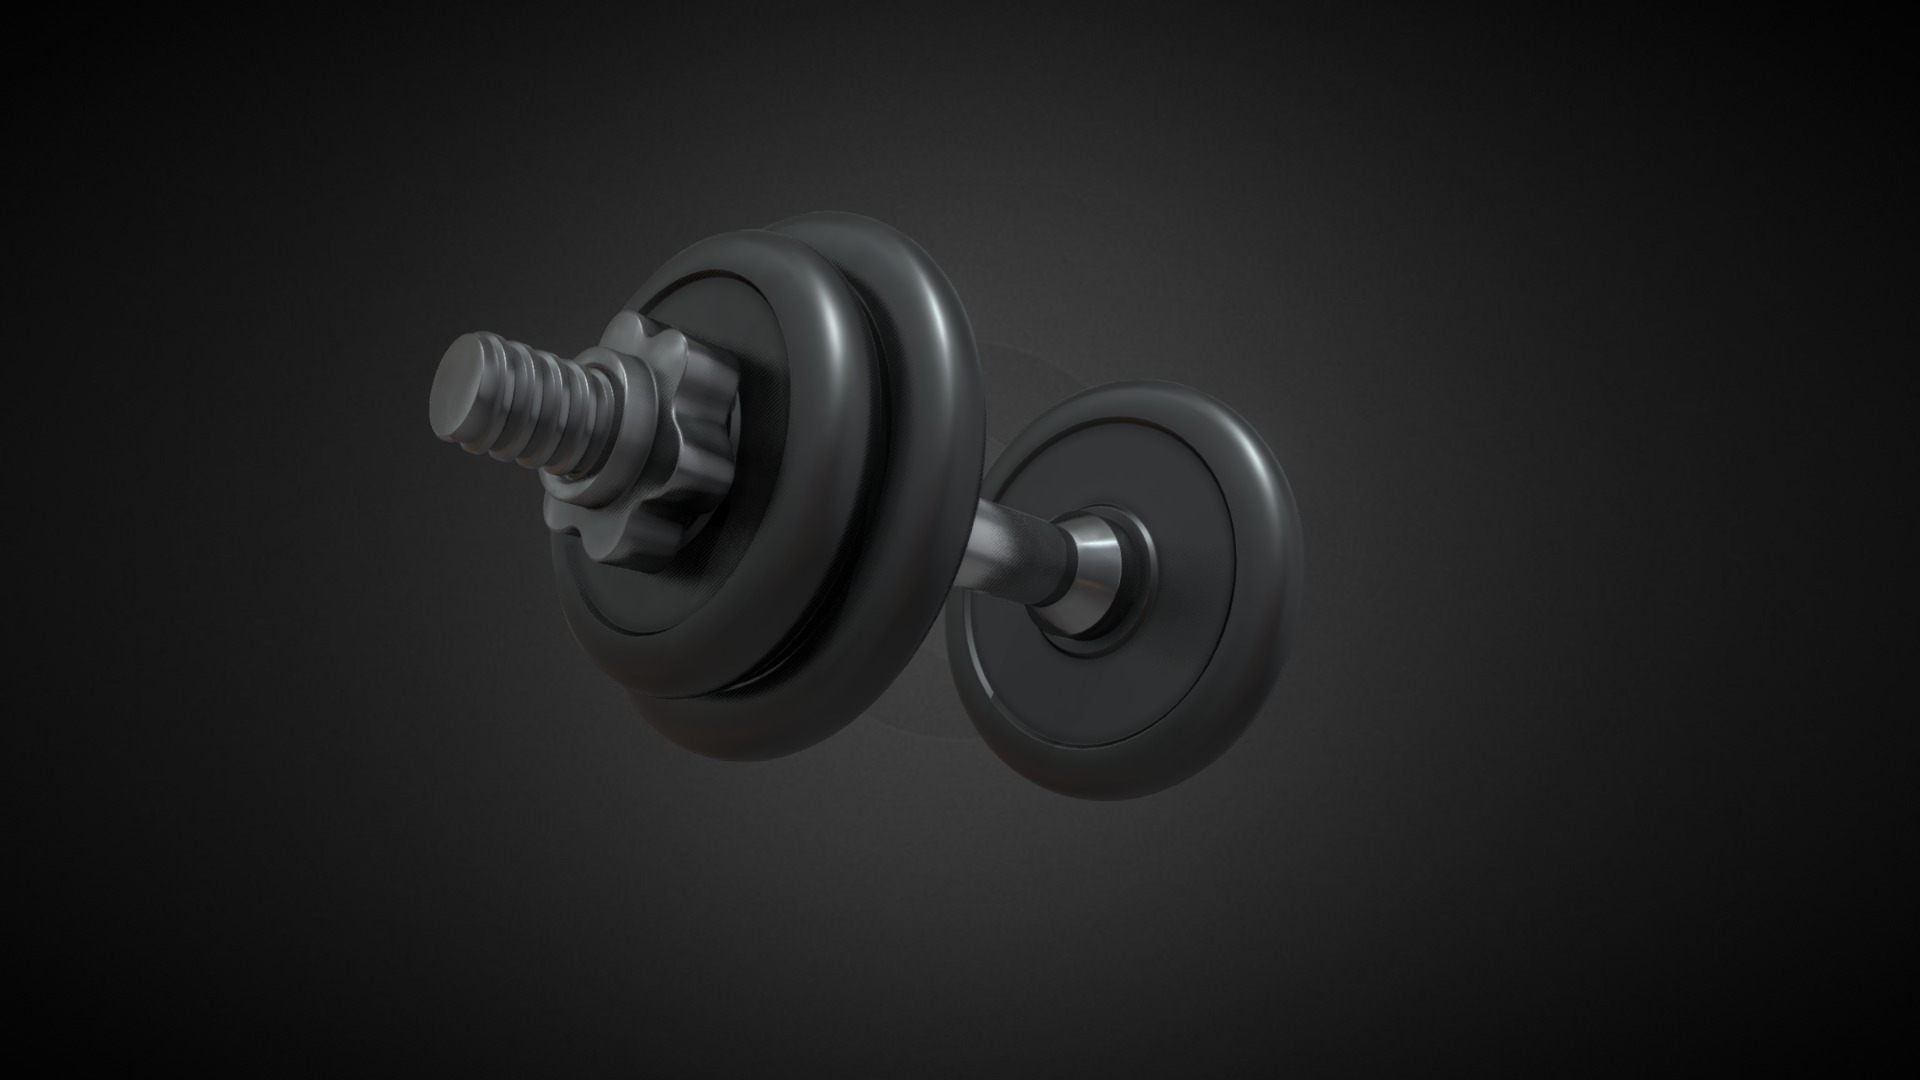 3D model Dumbbell Studio - This is a 3D model of the Dumbbell Studio. The 3D model is about a silver and black door knob.